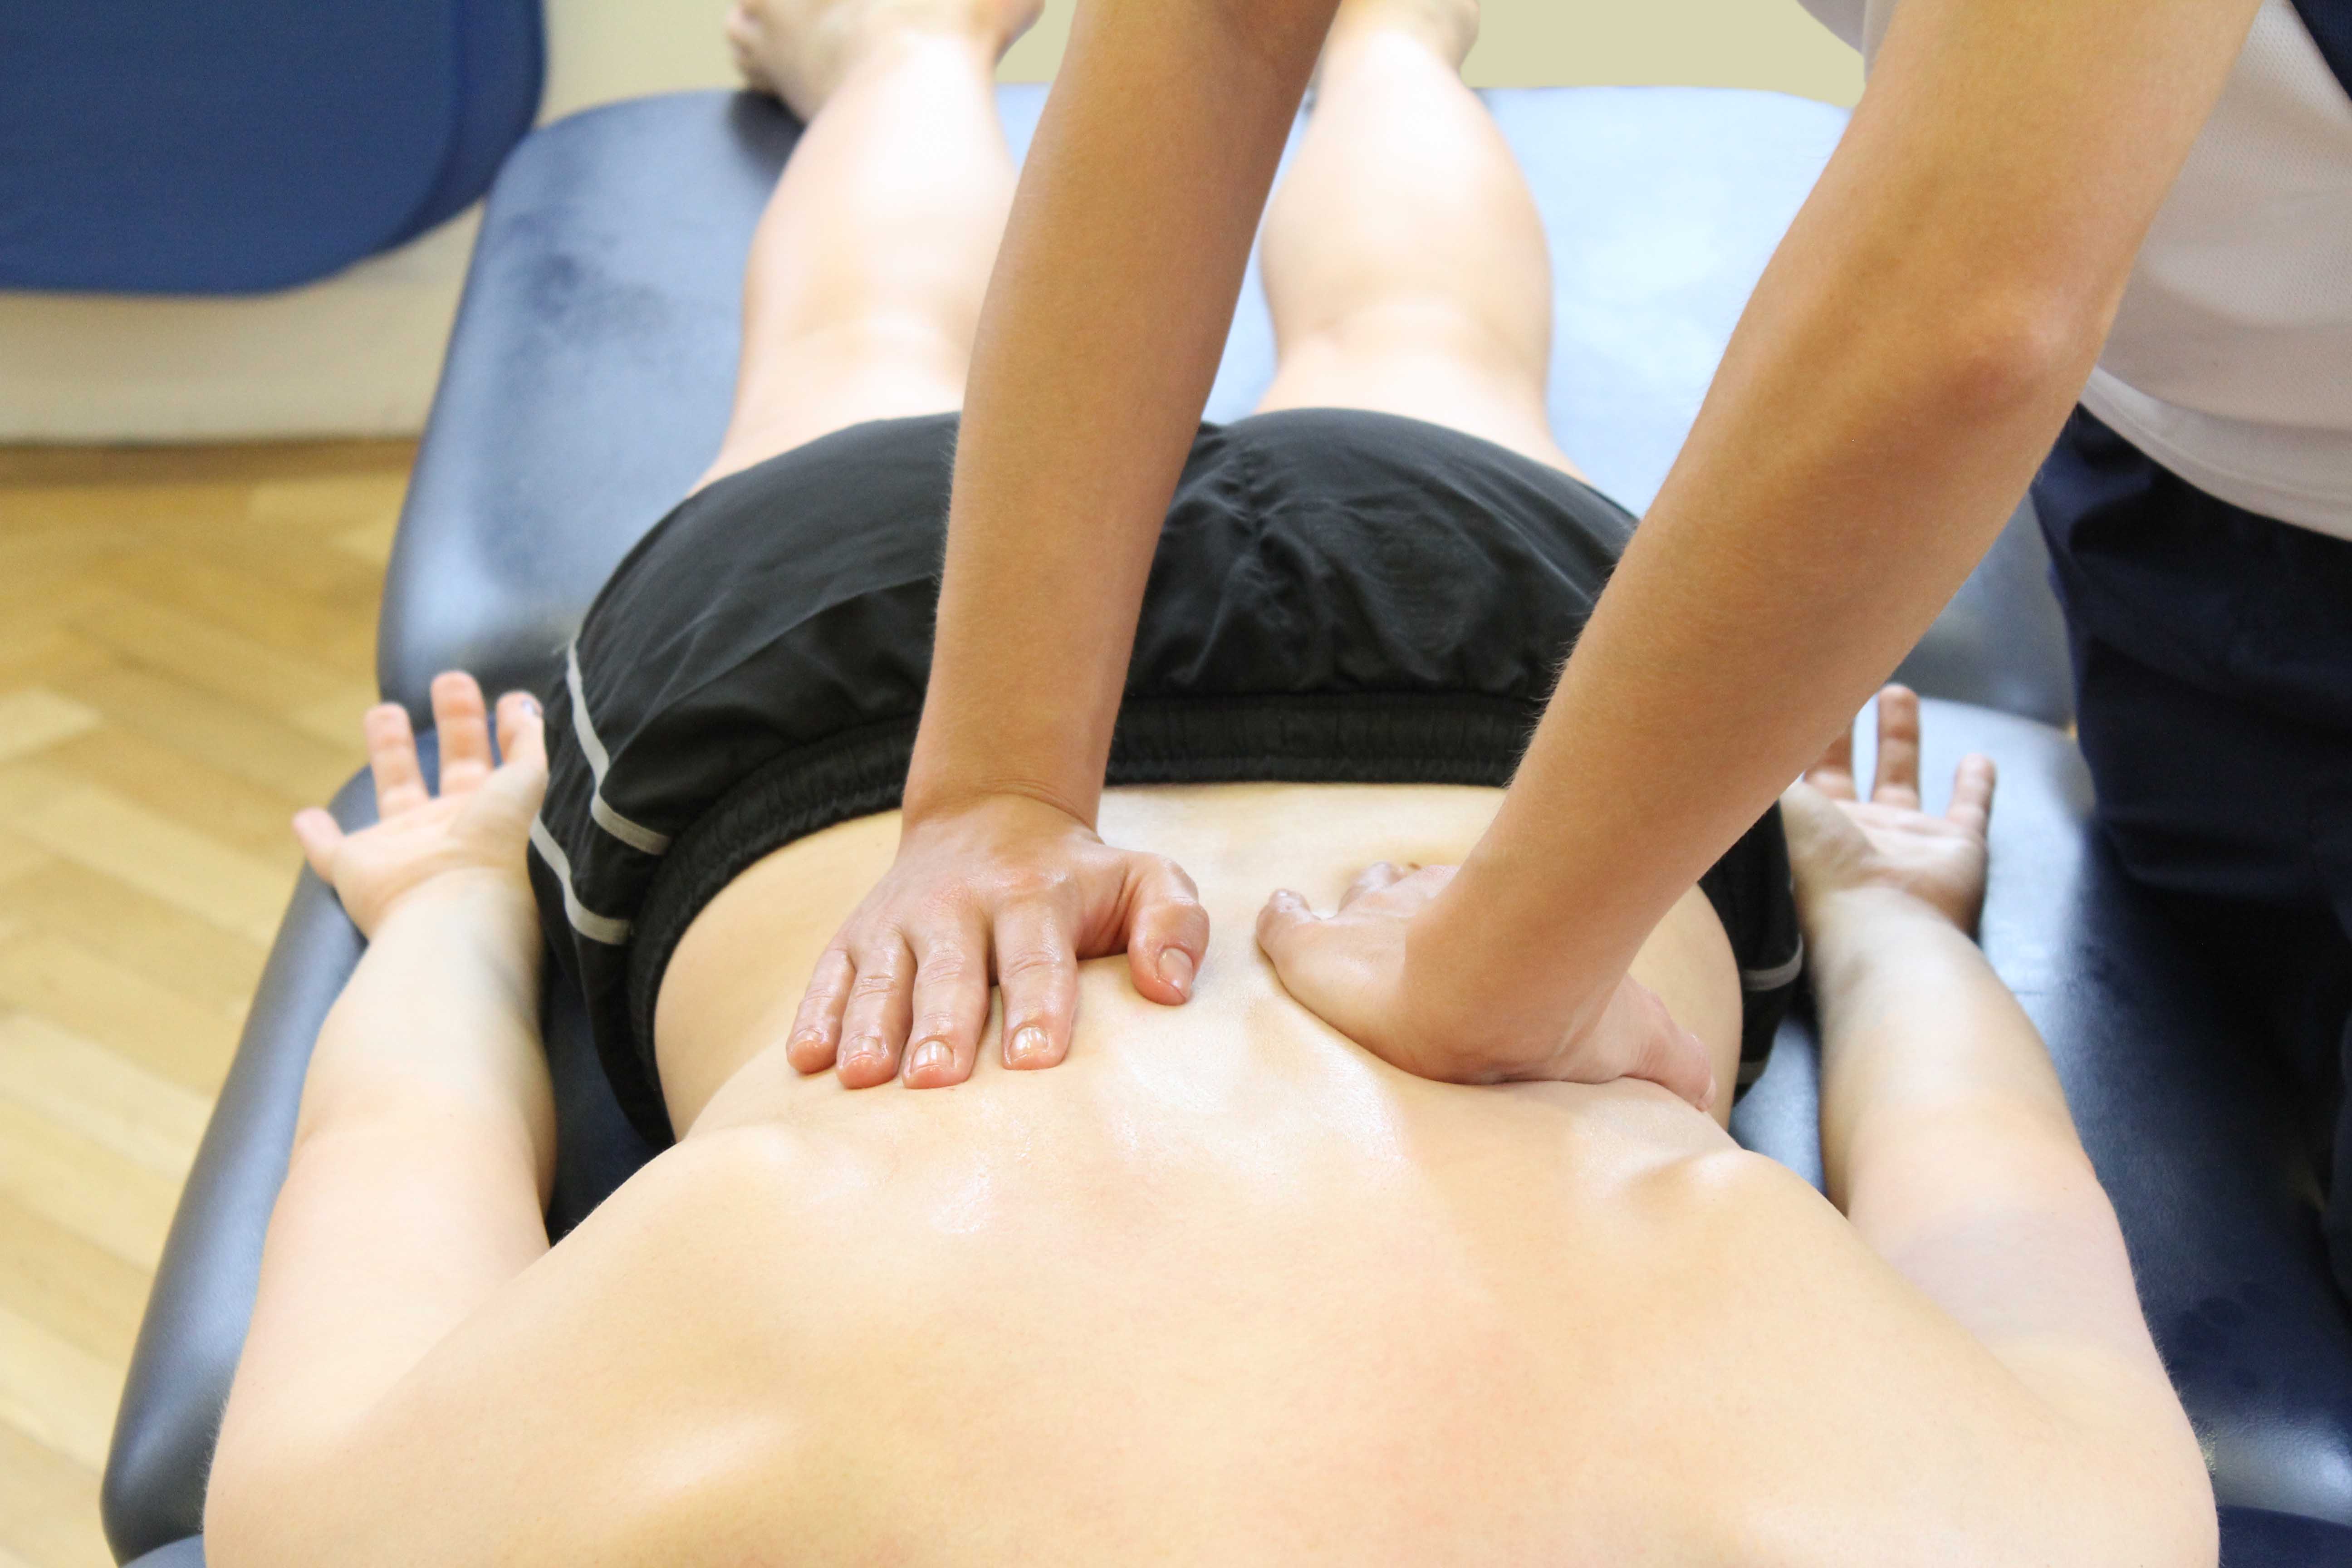 https://www.physio.co.uk/images/lower-back-massage/lower-back-massage1.jpg